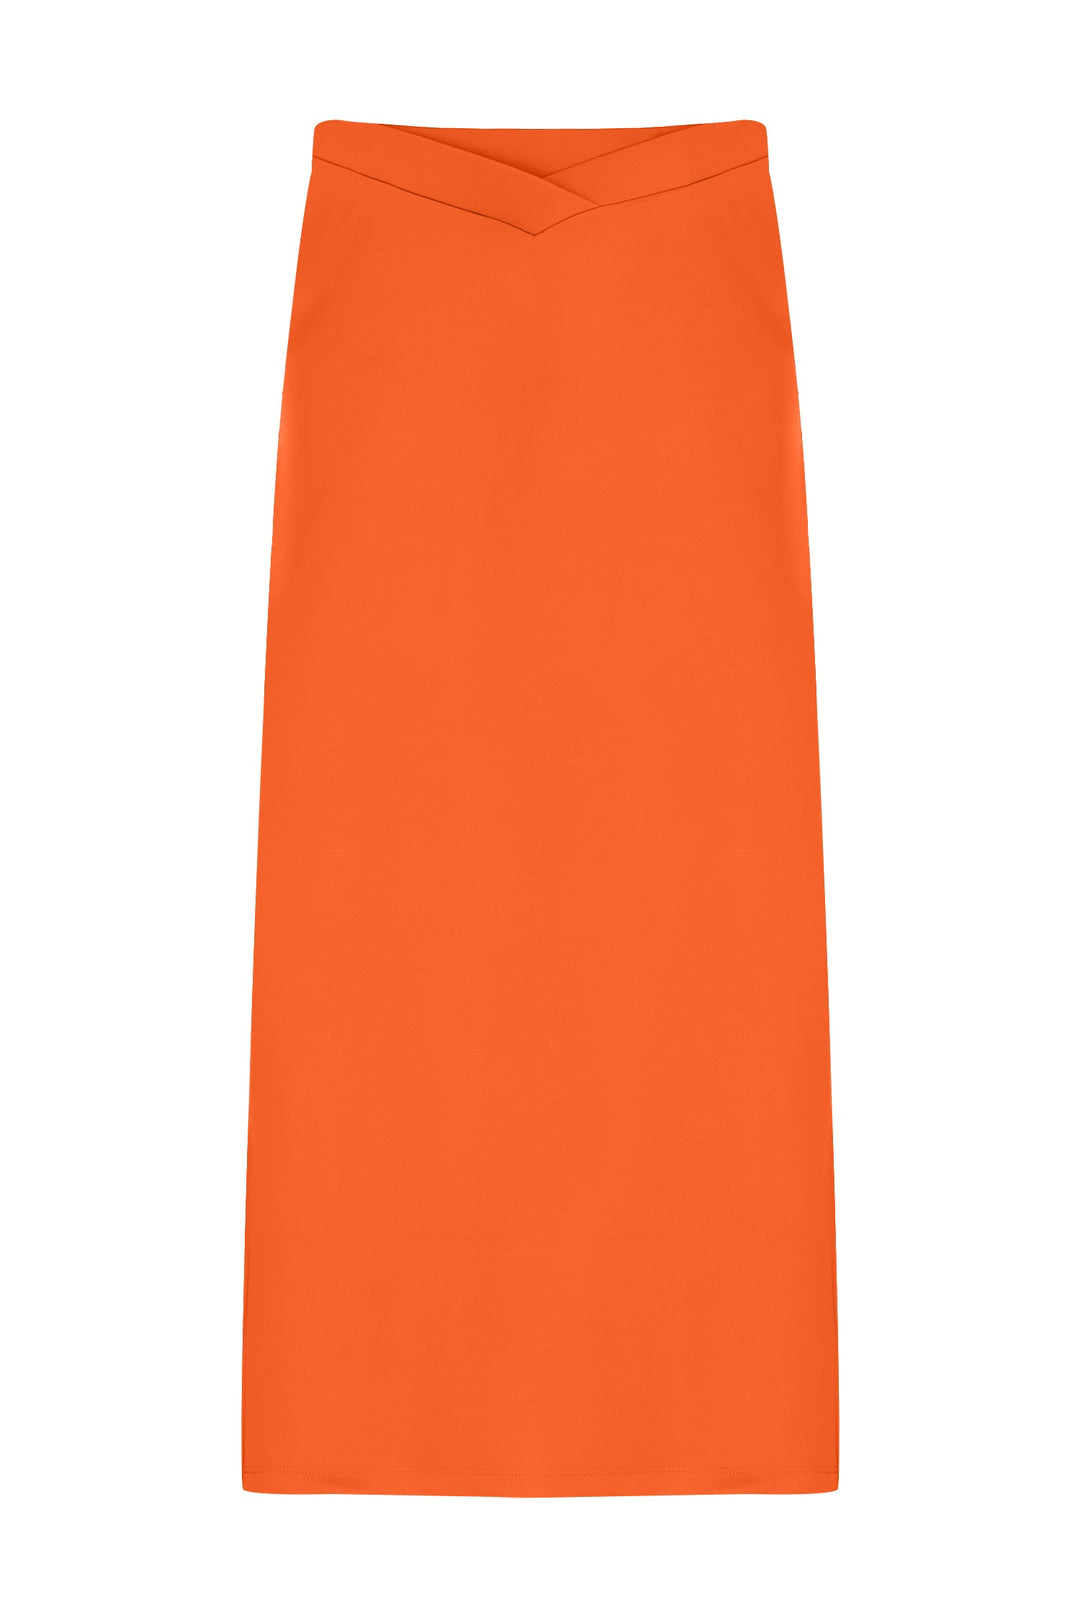 Gypsy Orange Long Skirt